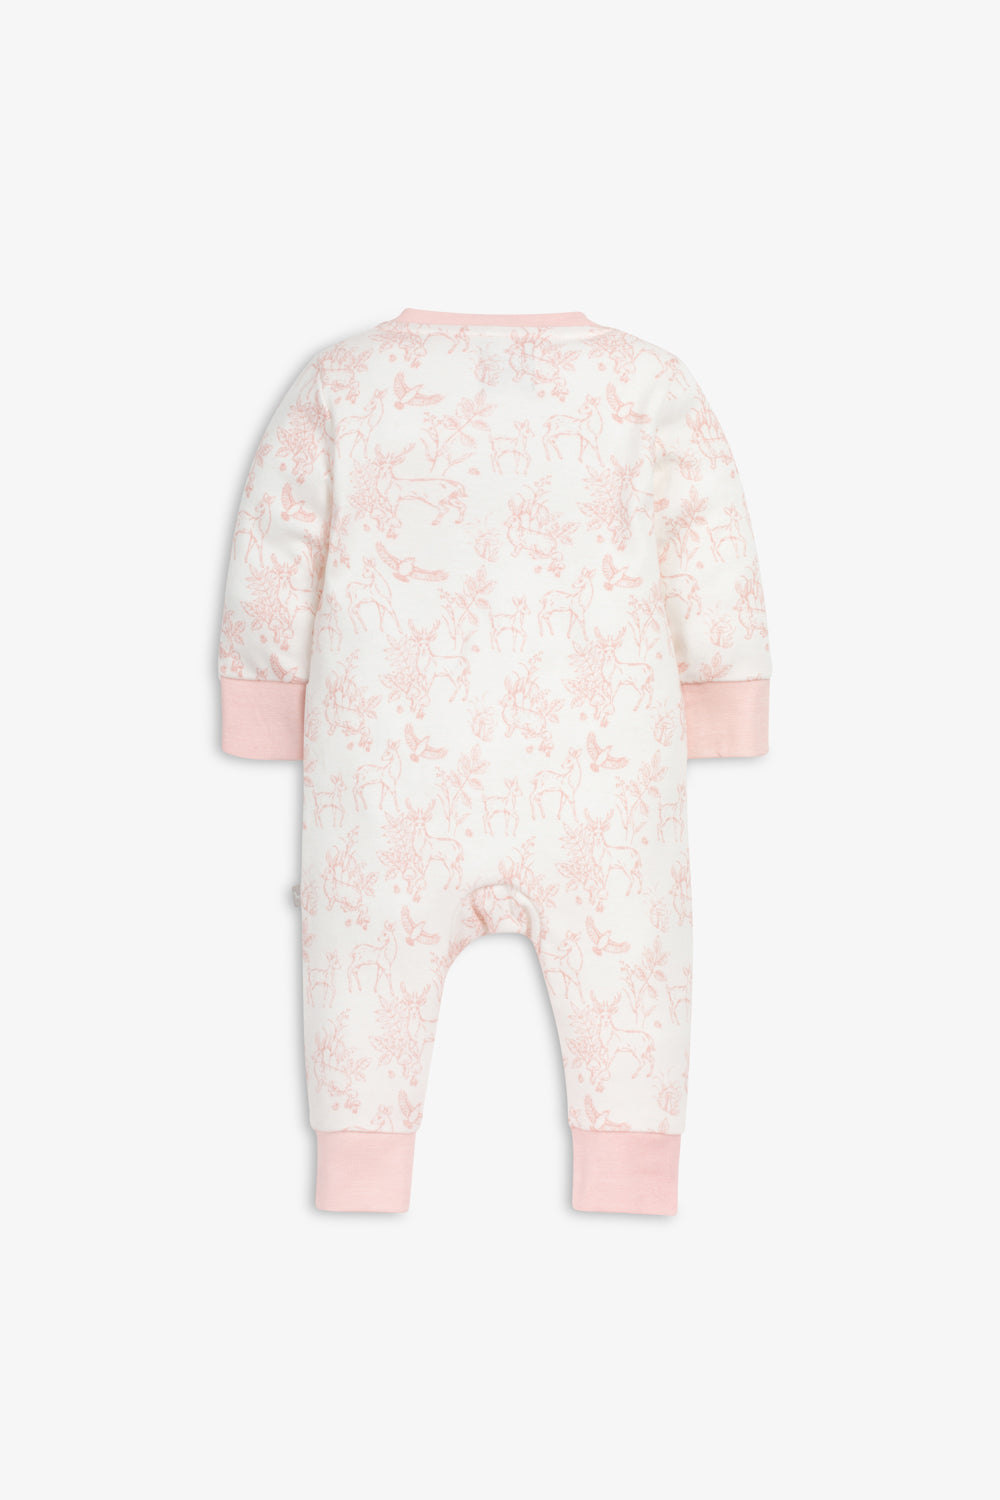 Sleepsuit and Bunny Gift Set, rose pink woodland print